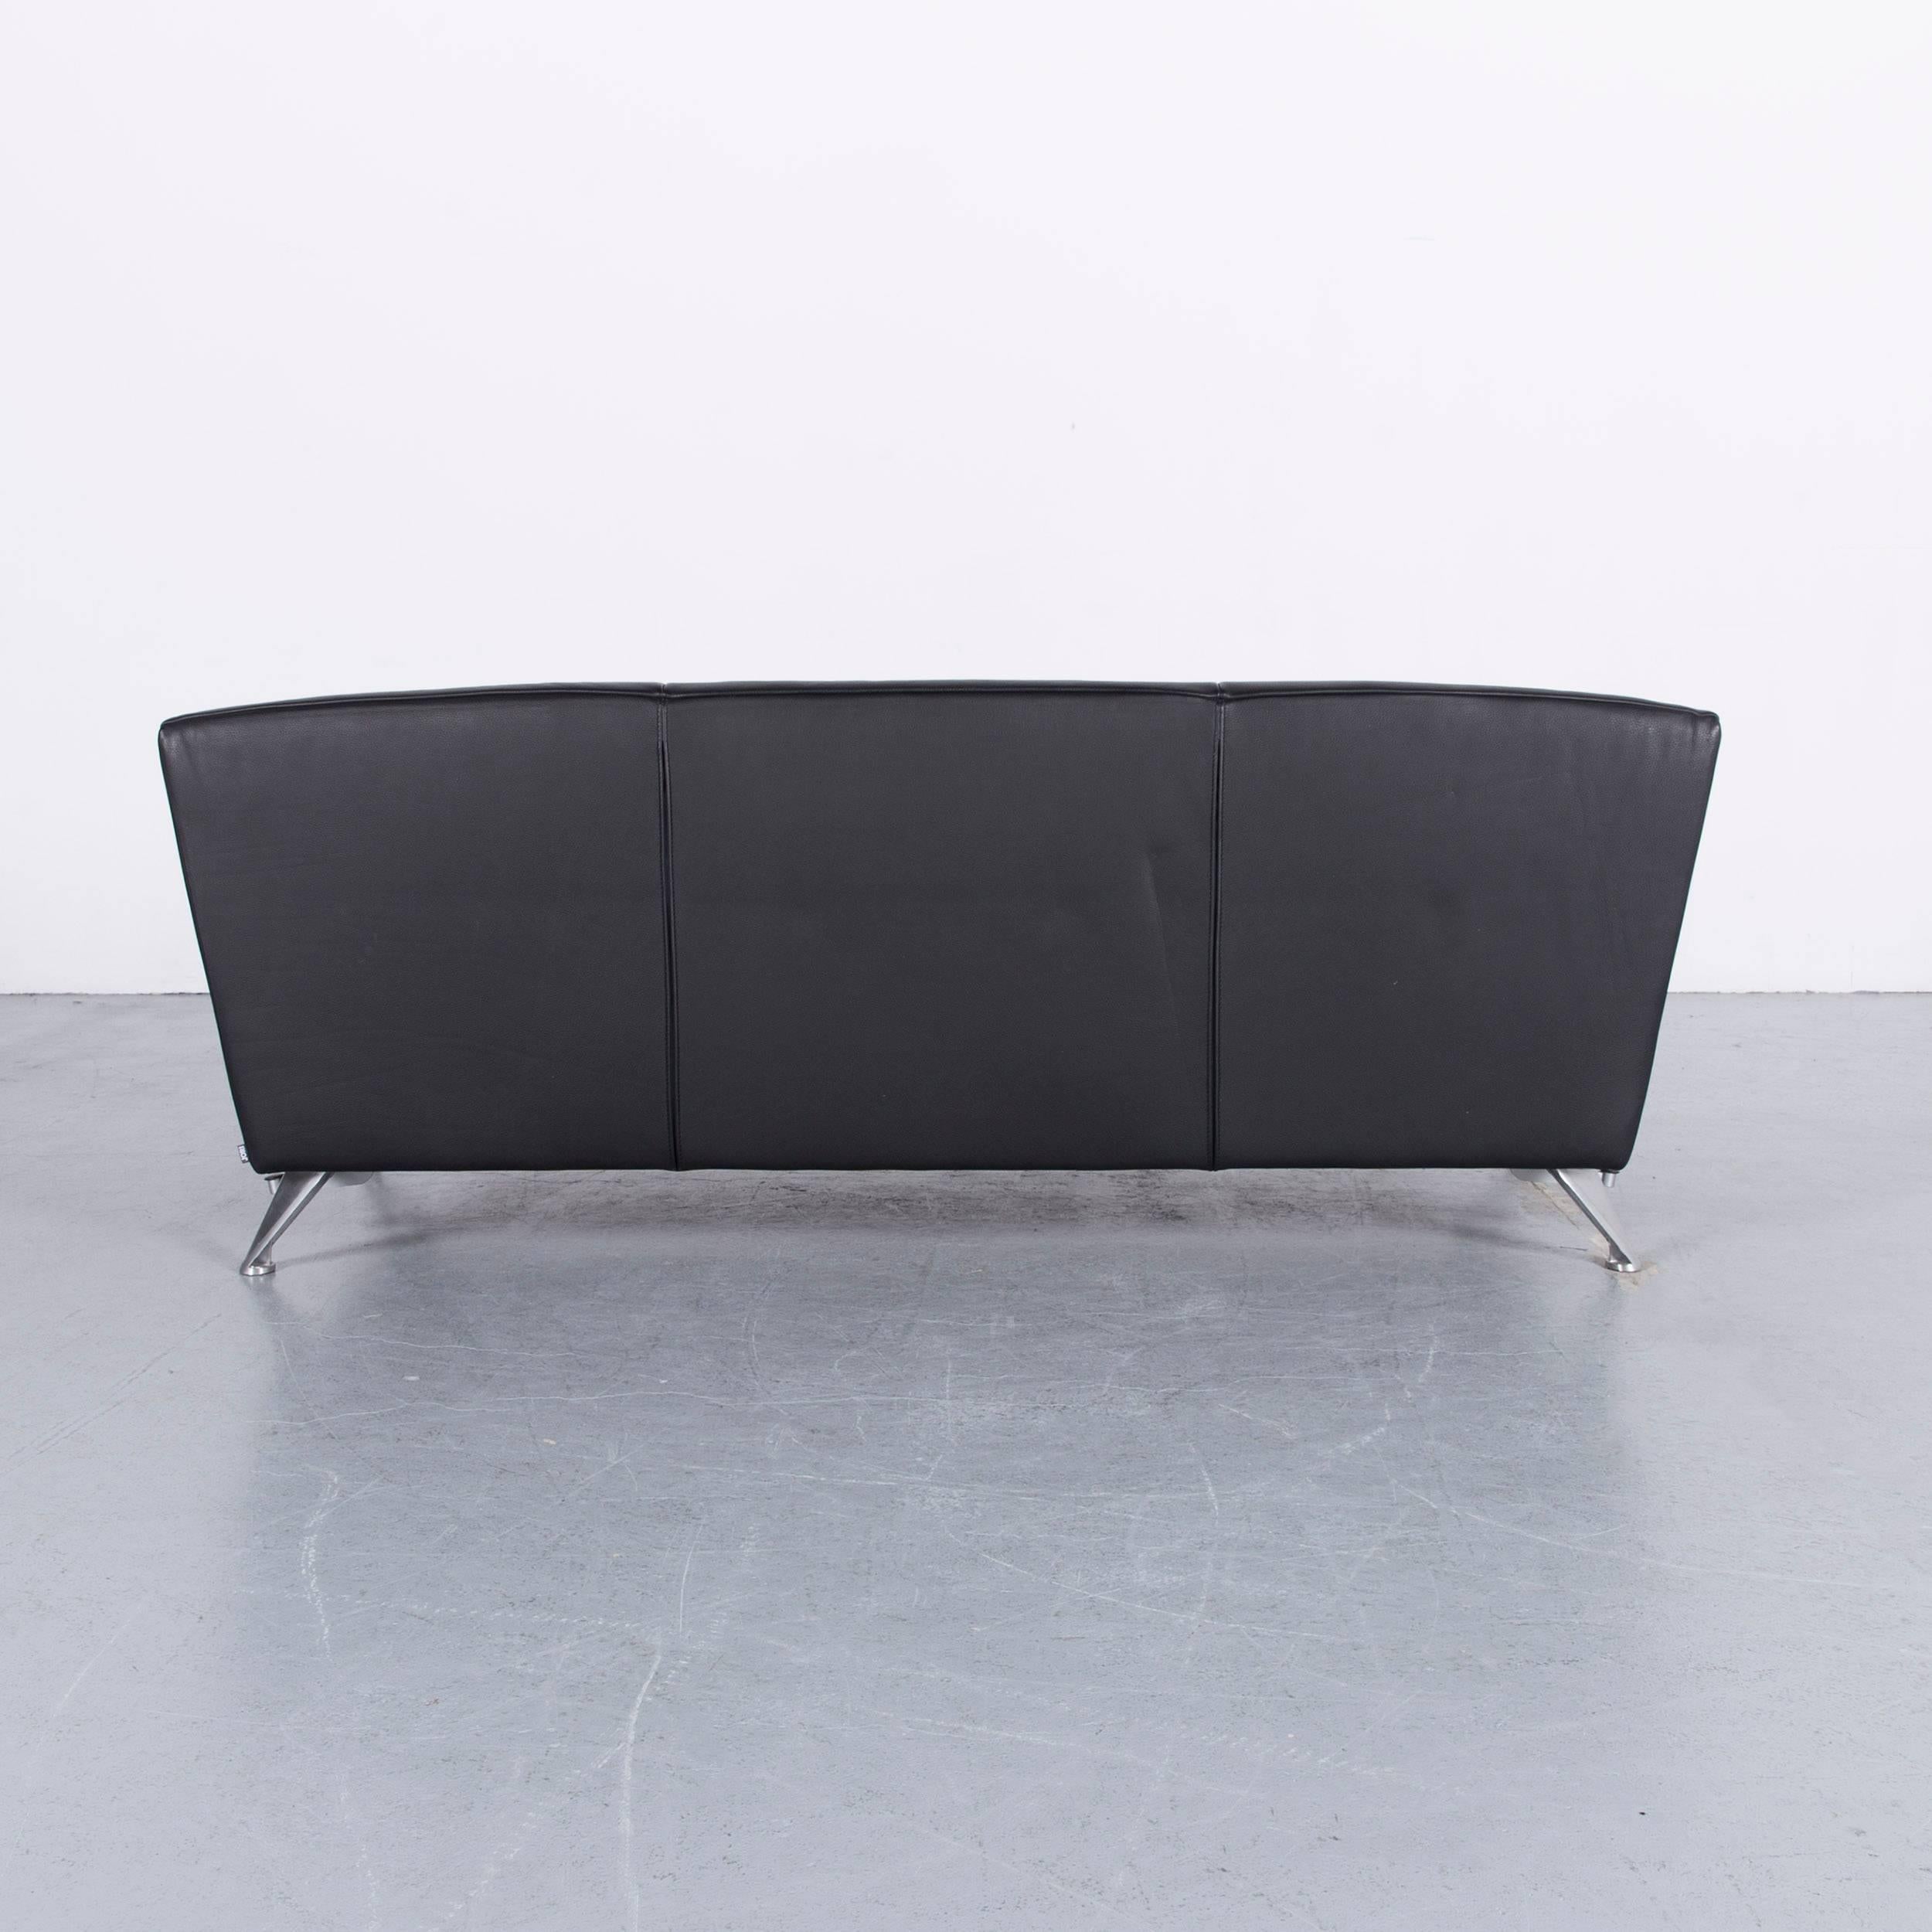 Jori JR 9700 Leather Sofa Black Three-Seat Couch 7